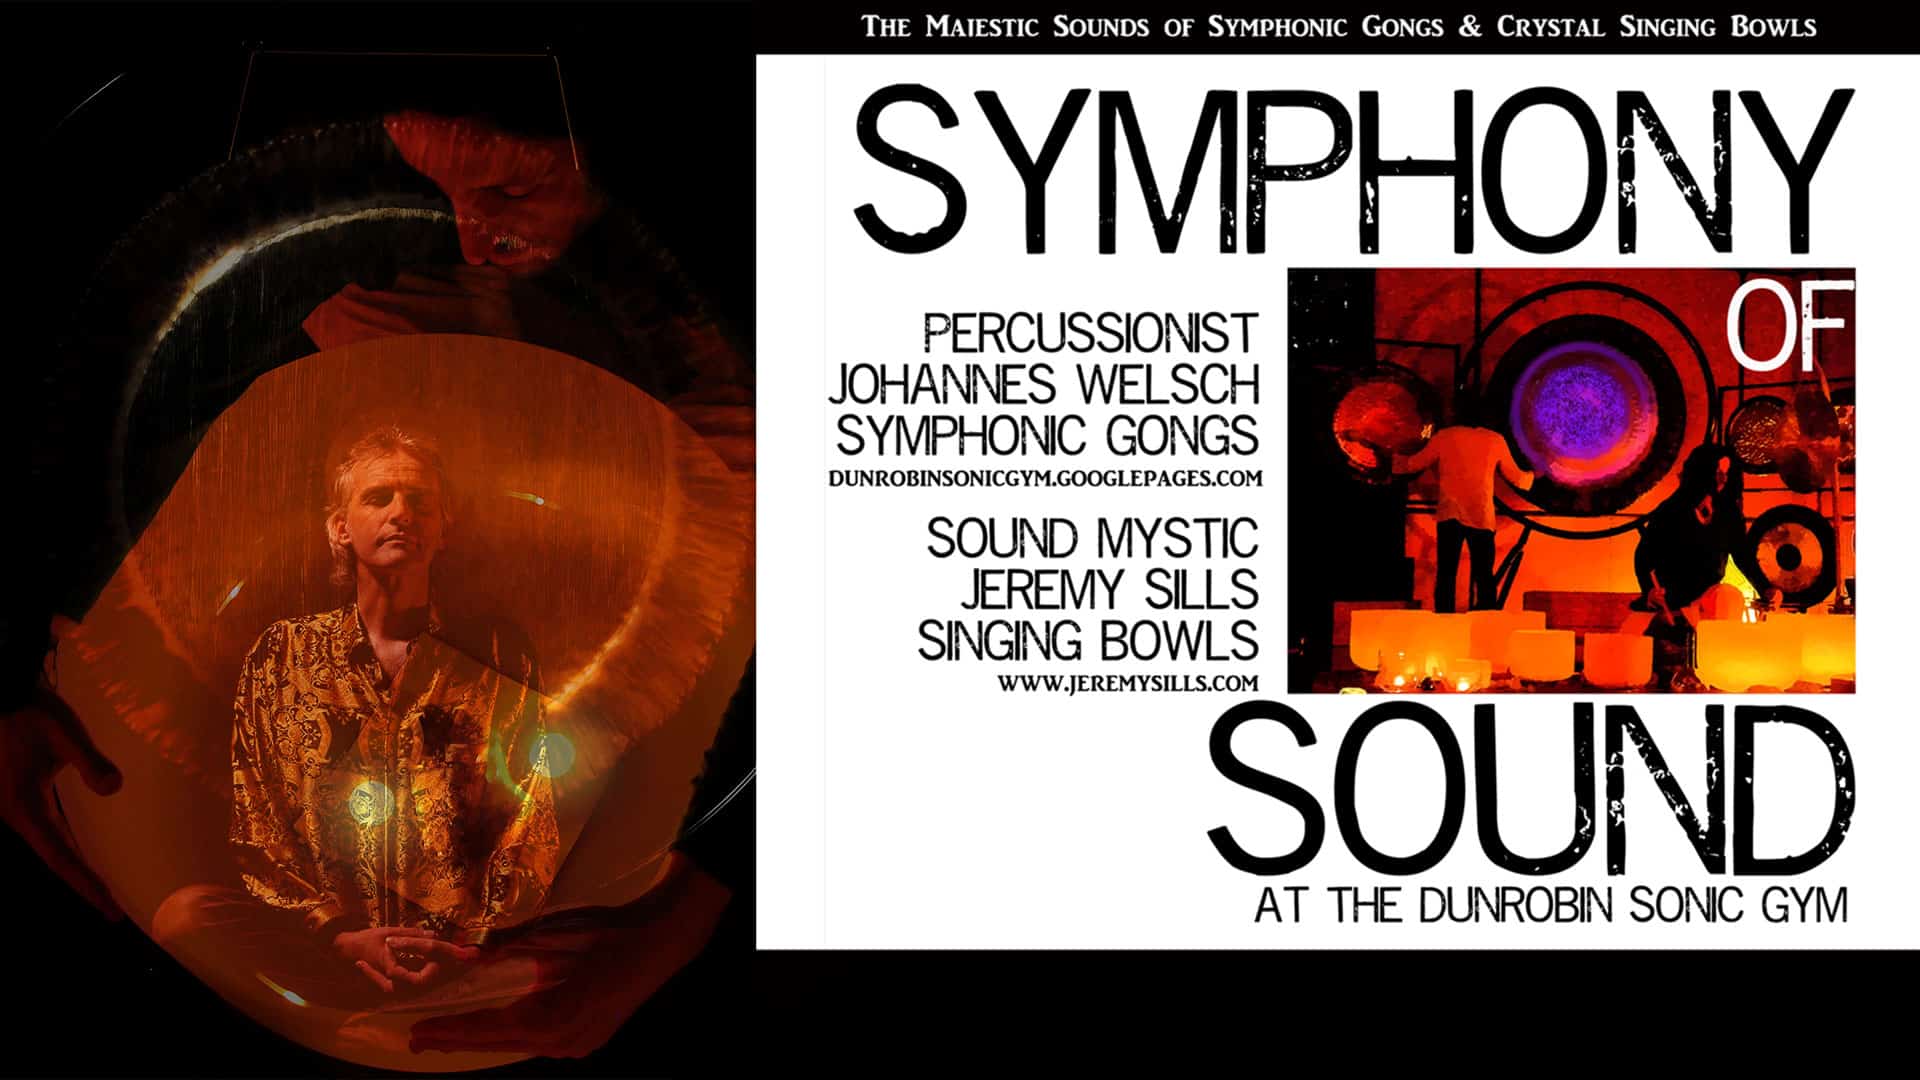 SOS-symphony-of-sound-sills-welsch